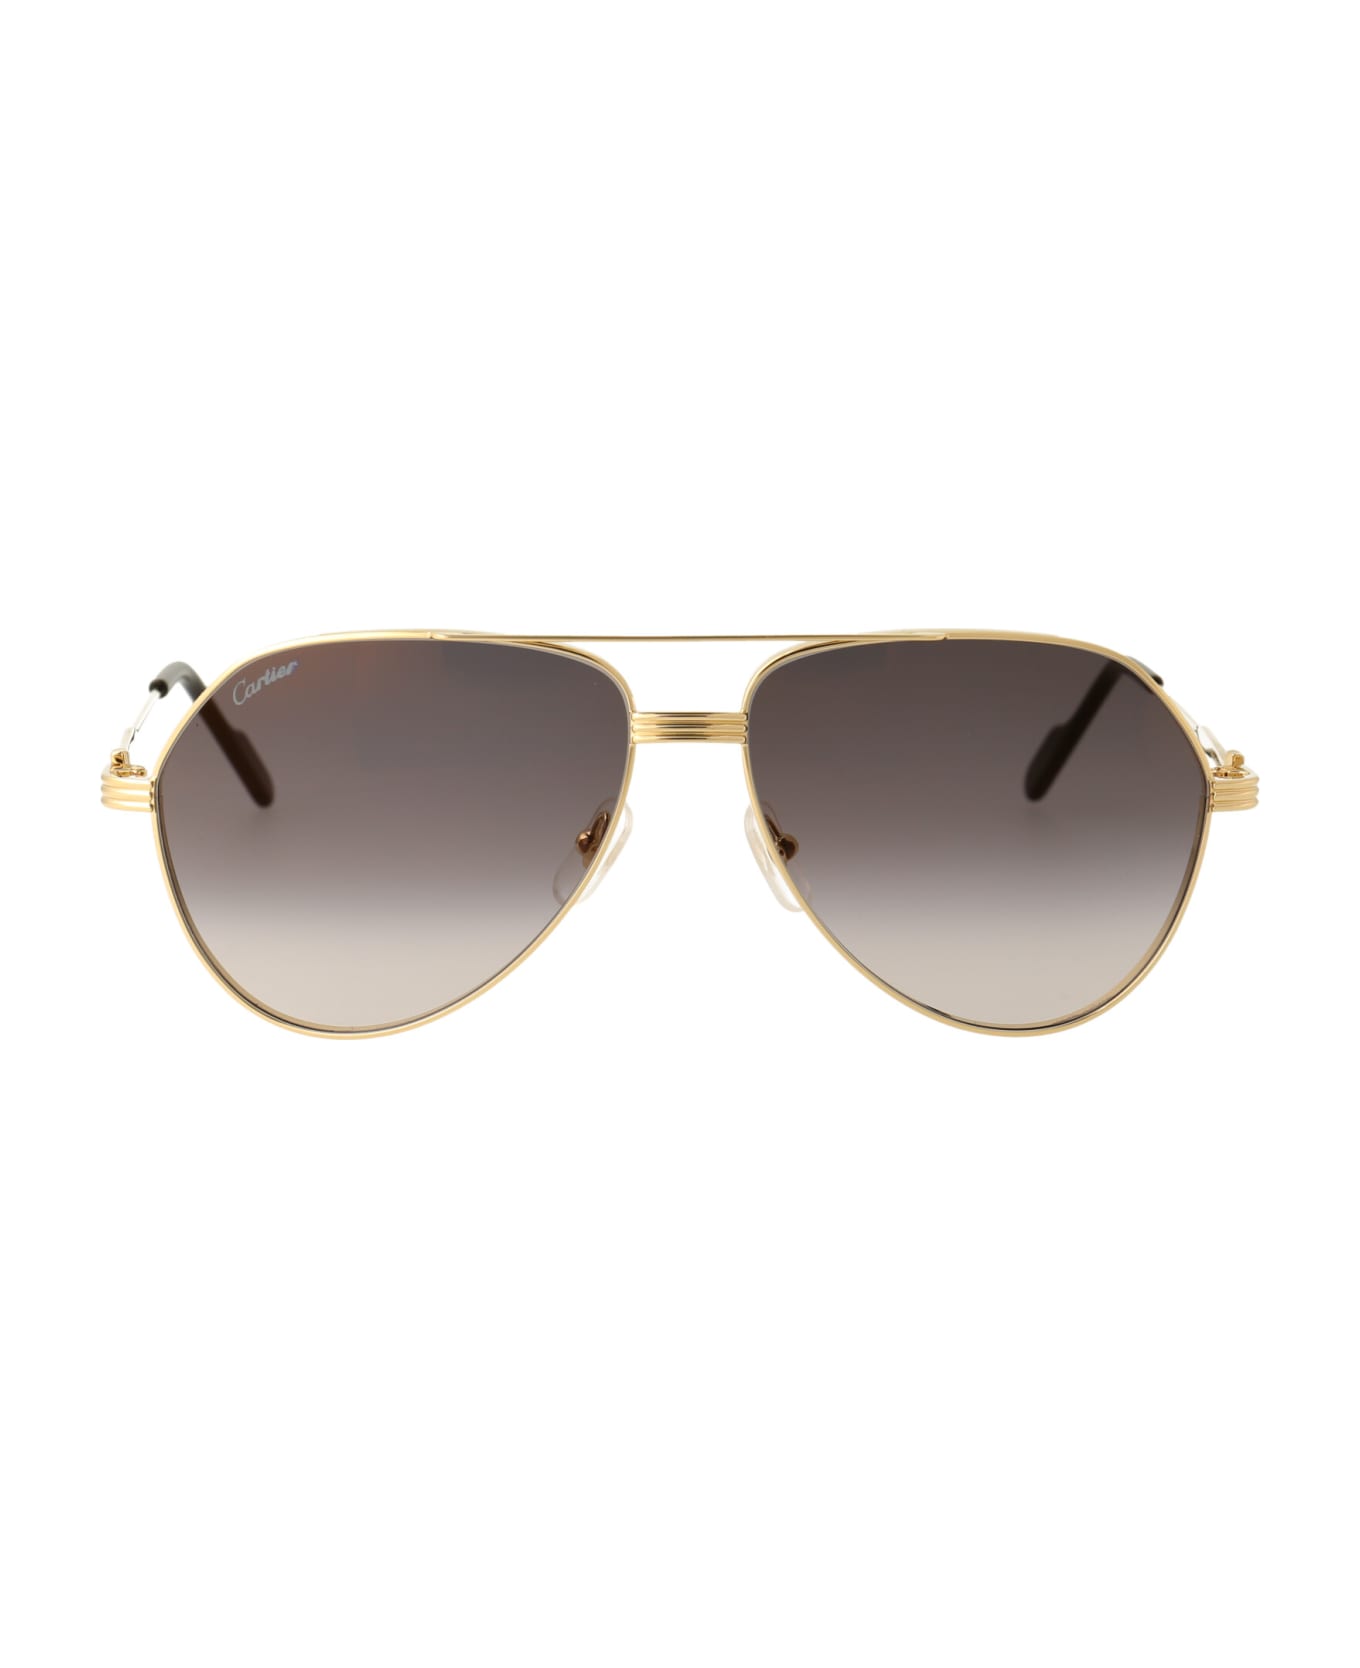 Cartier Eyewear Ct0303s Sunglasses - 001 GOLD GOLD GREY